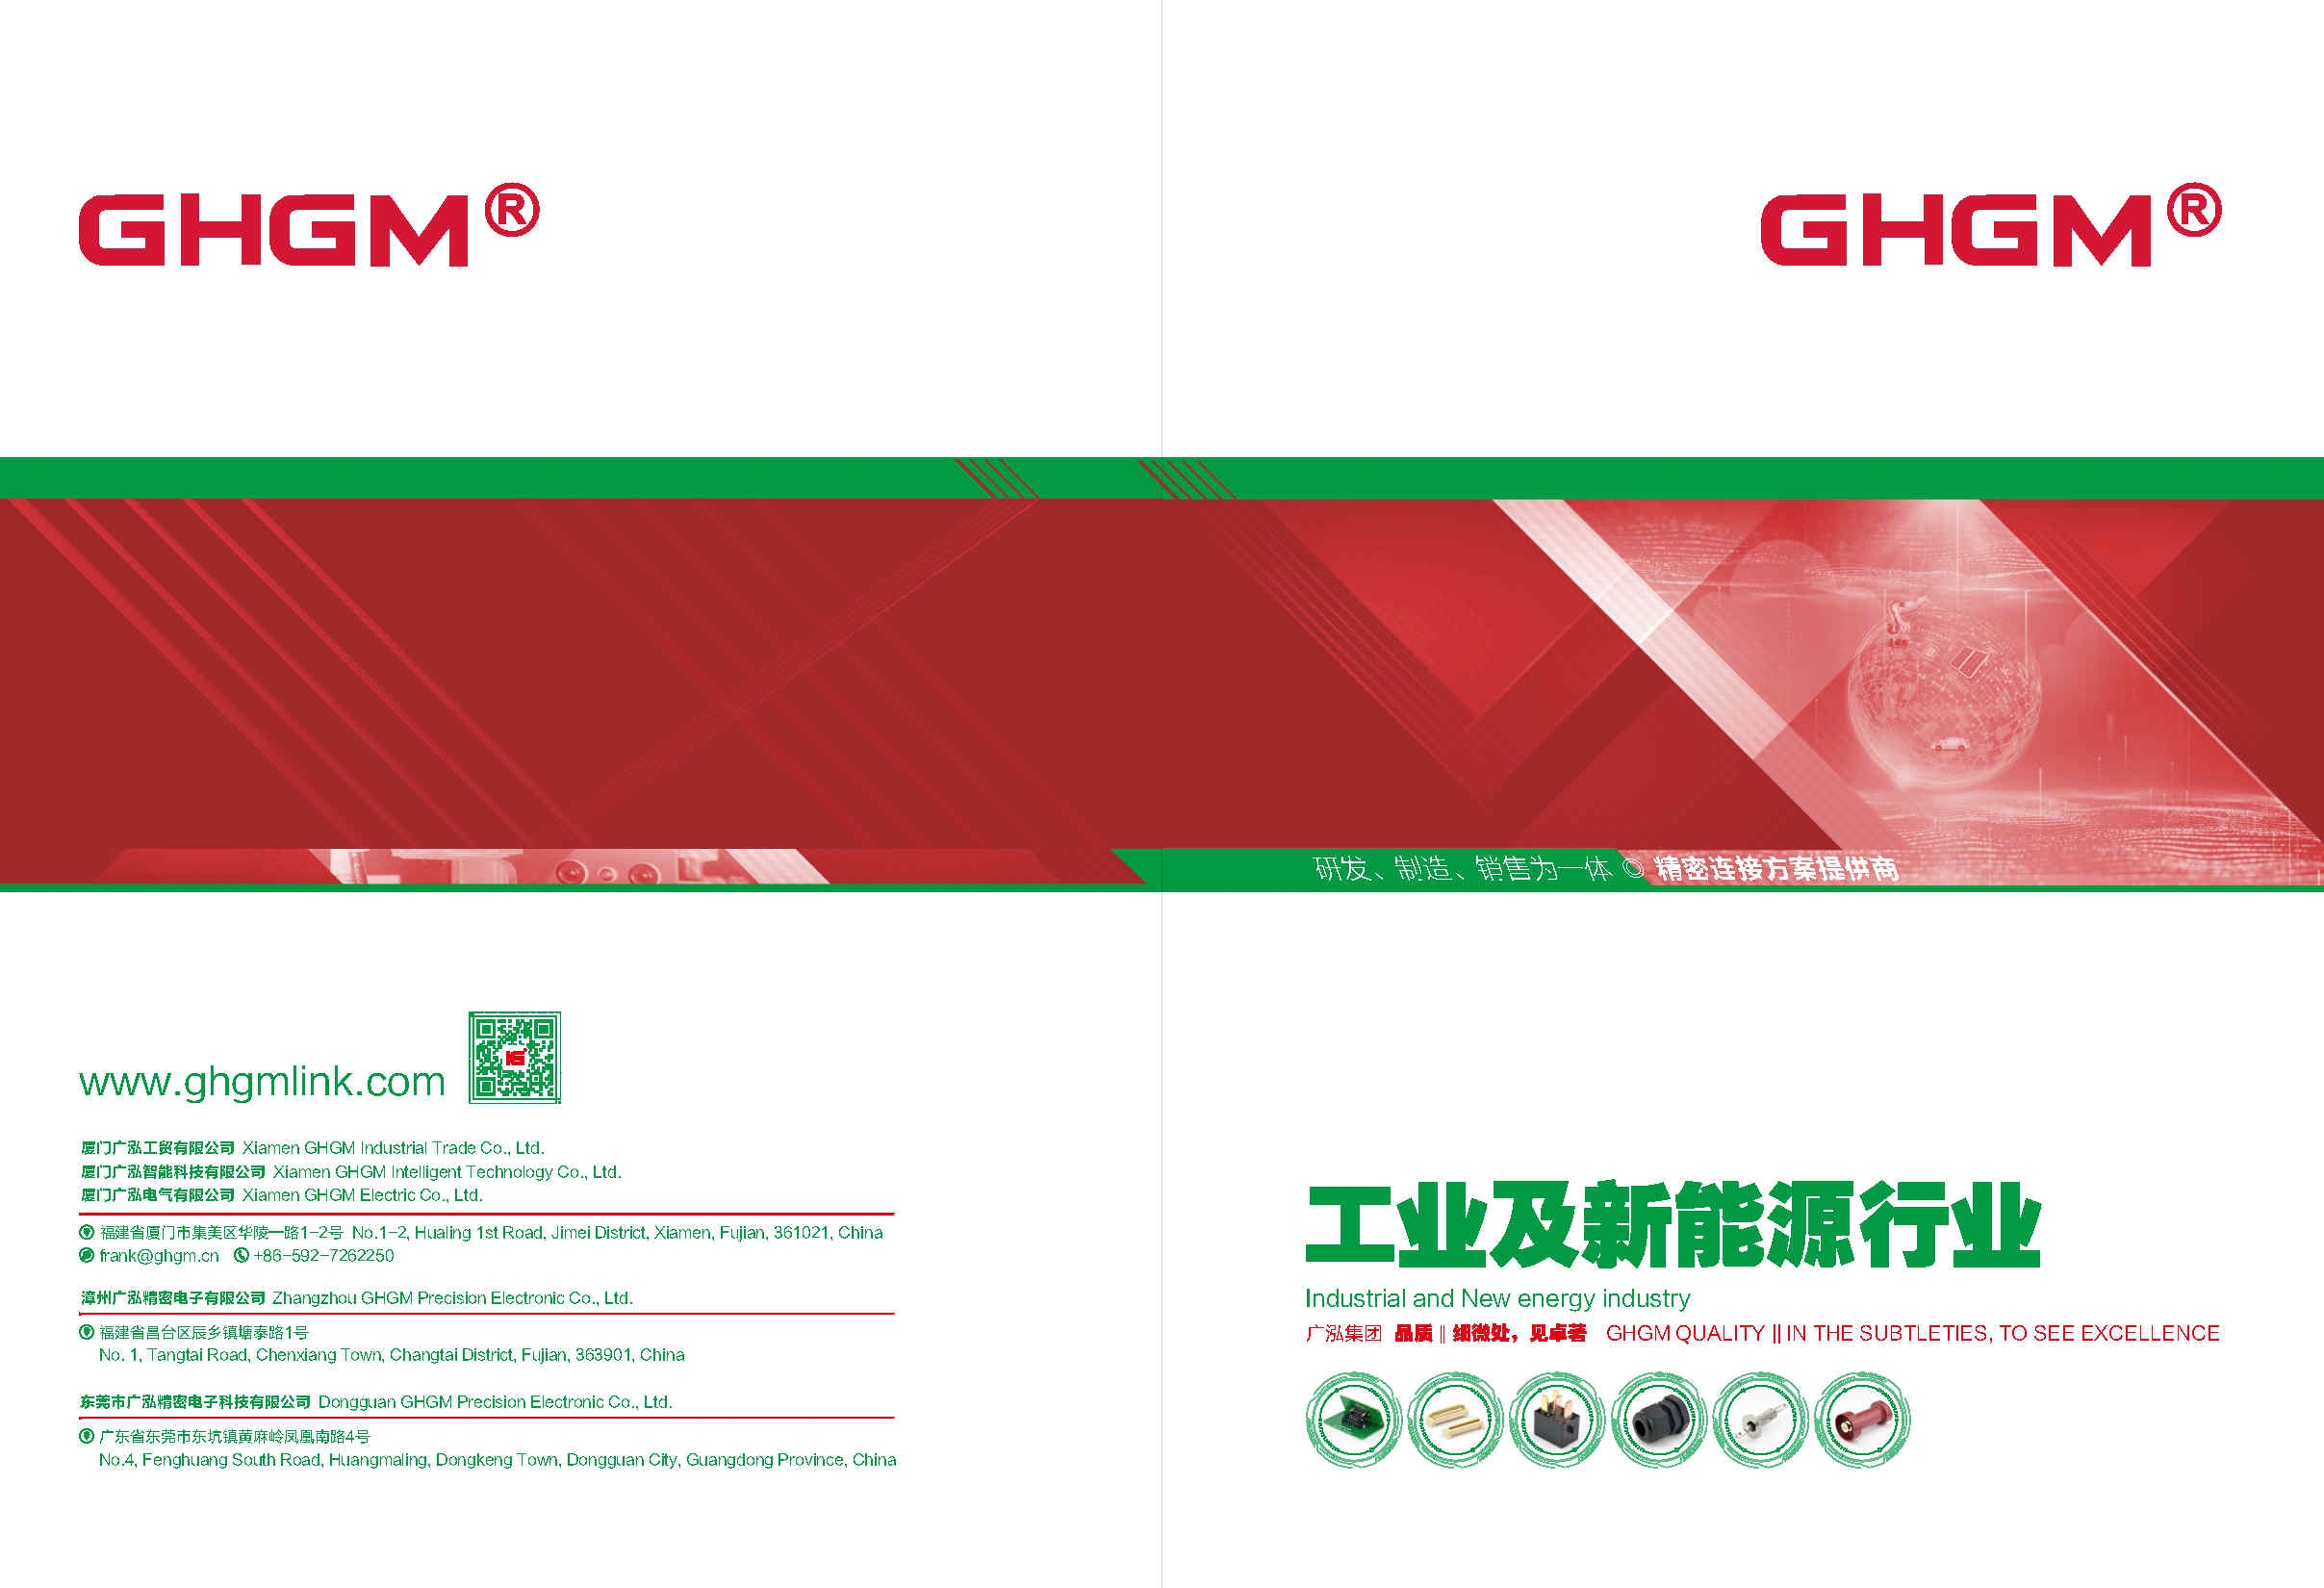 2022 GHGM, 産業・新エネルギー産業, オンラインカタログ
